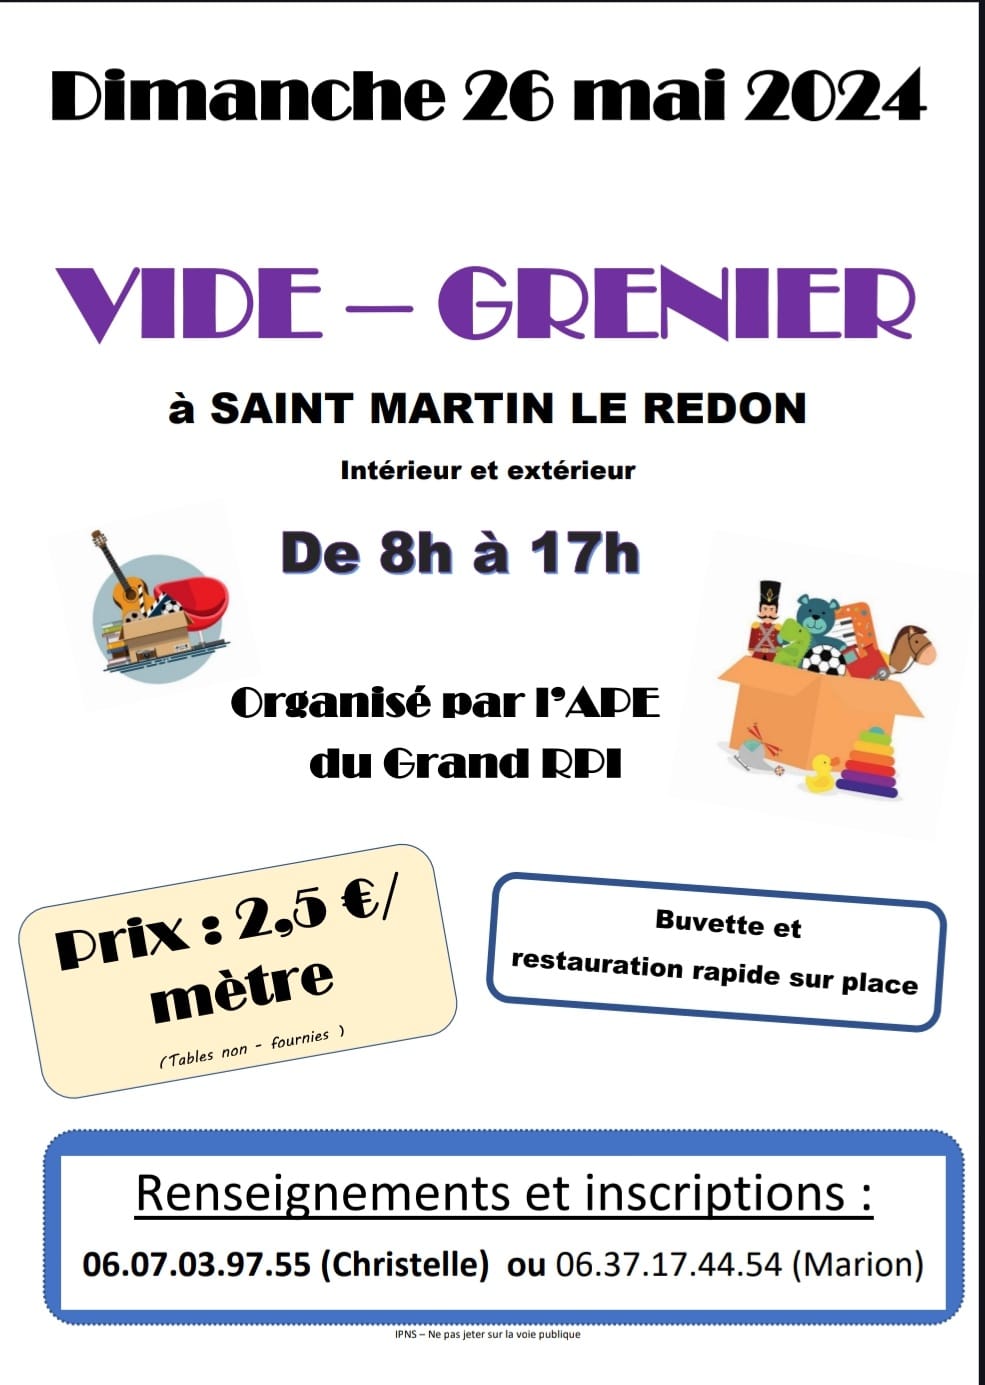 Vide-greniers à Saint-Martin-le-Redon null France null null null null